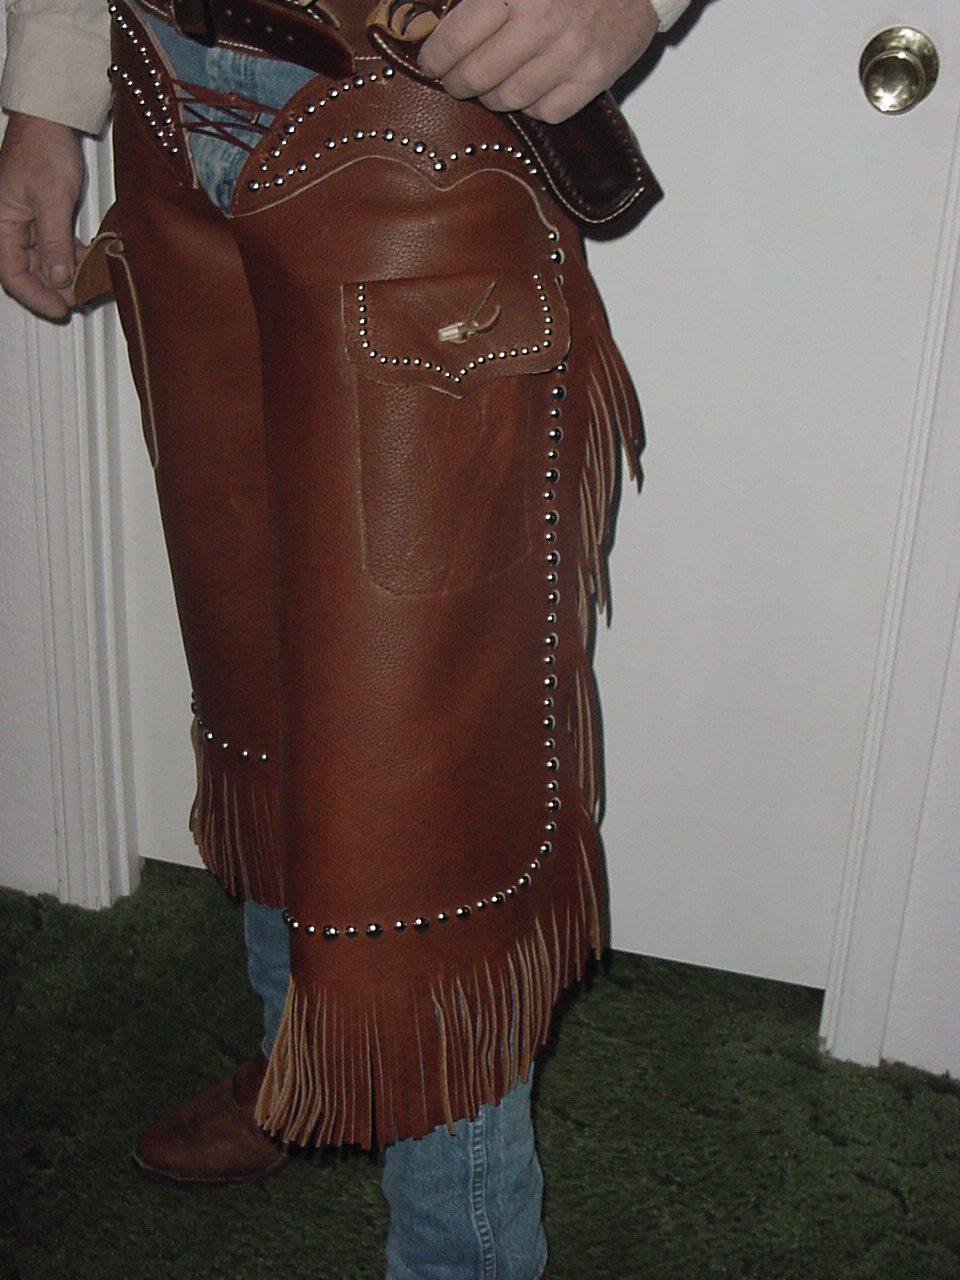 oiltan leather, 4 oz,  double pockets  $235.